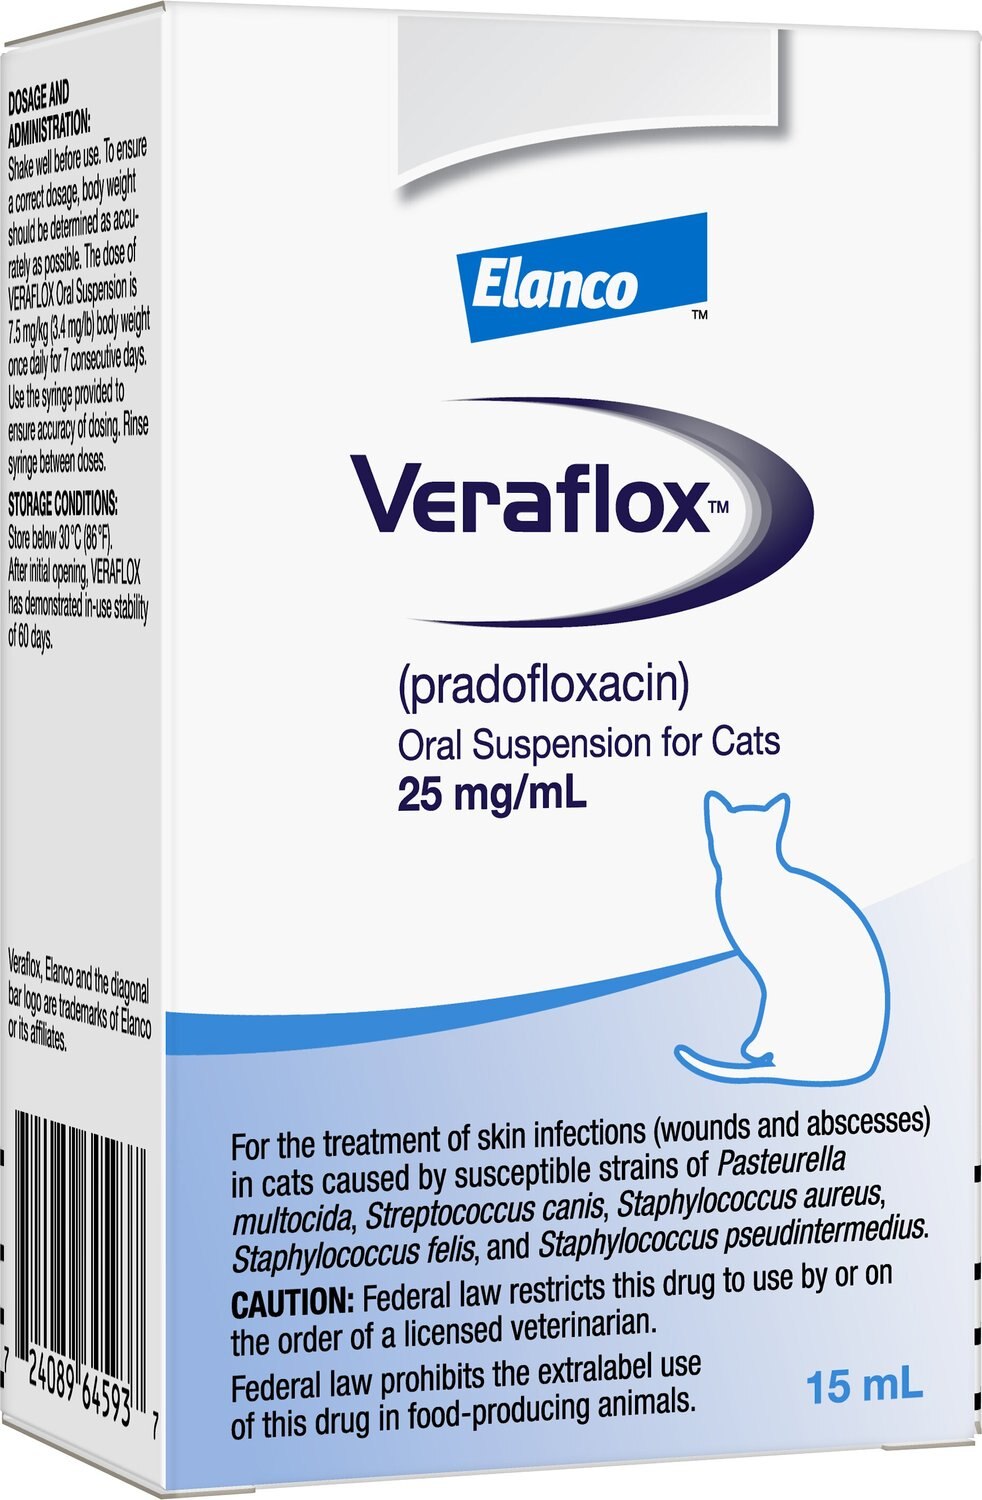 VERAFLOX Oral Suspension for Cats, 25 mg/mL, 15mL